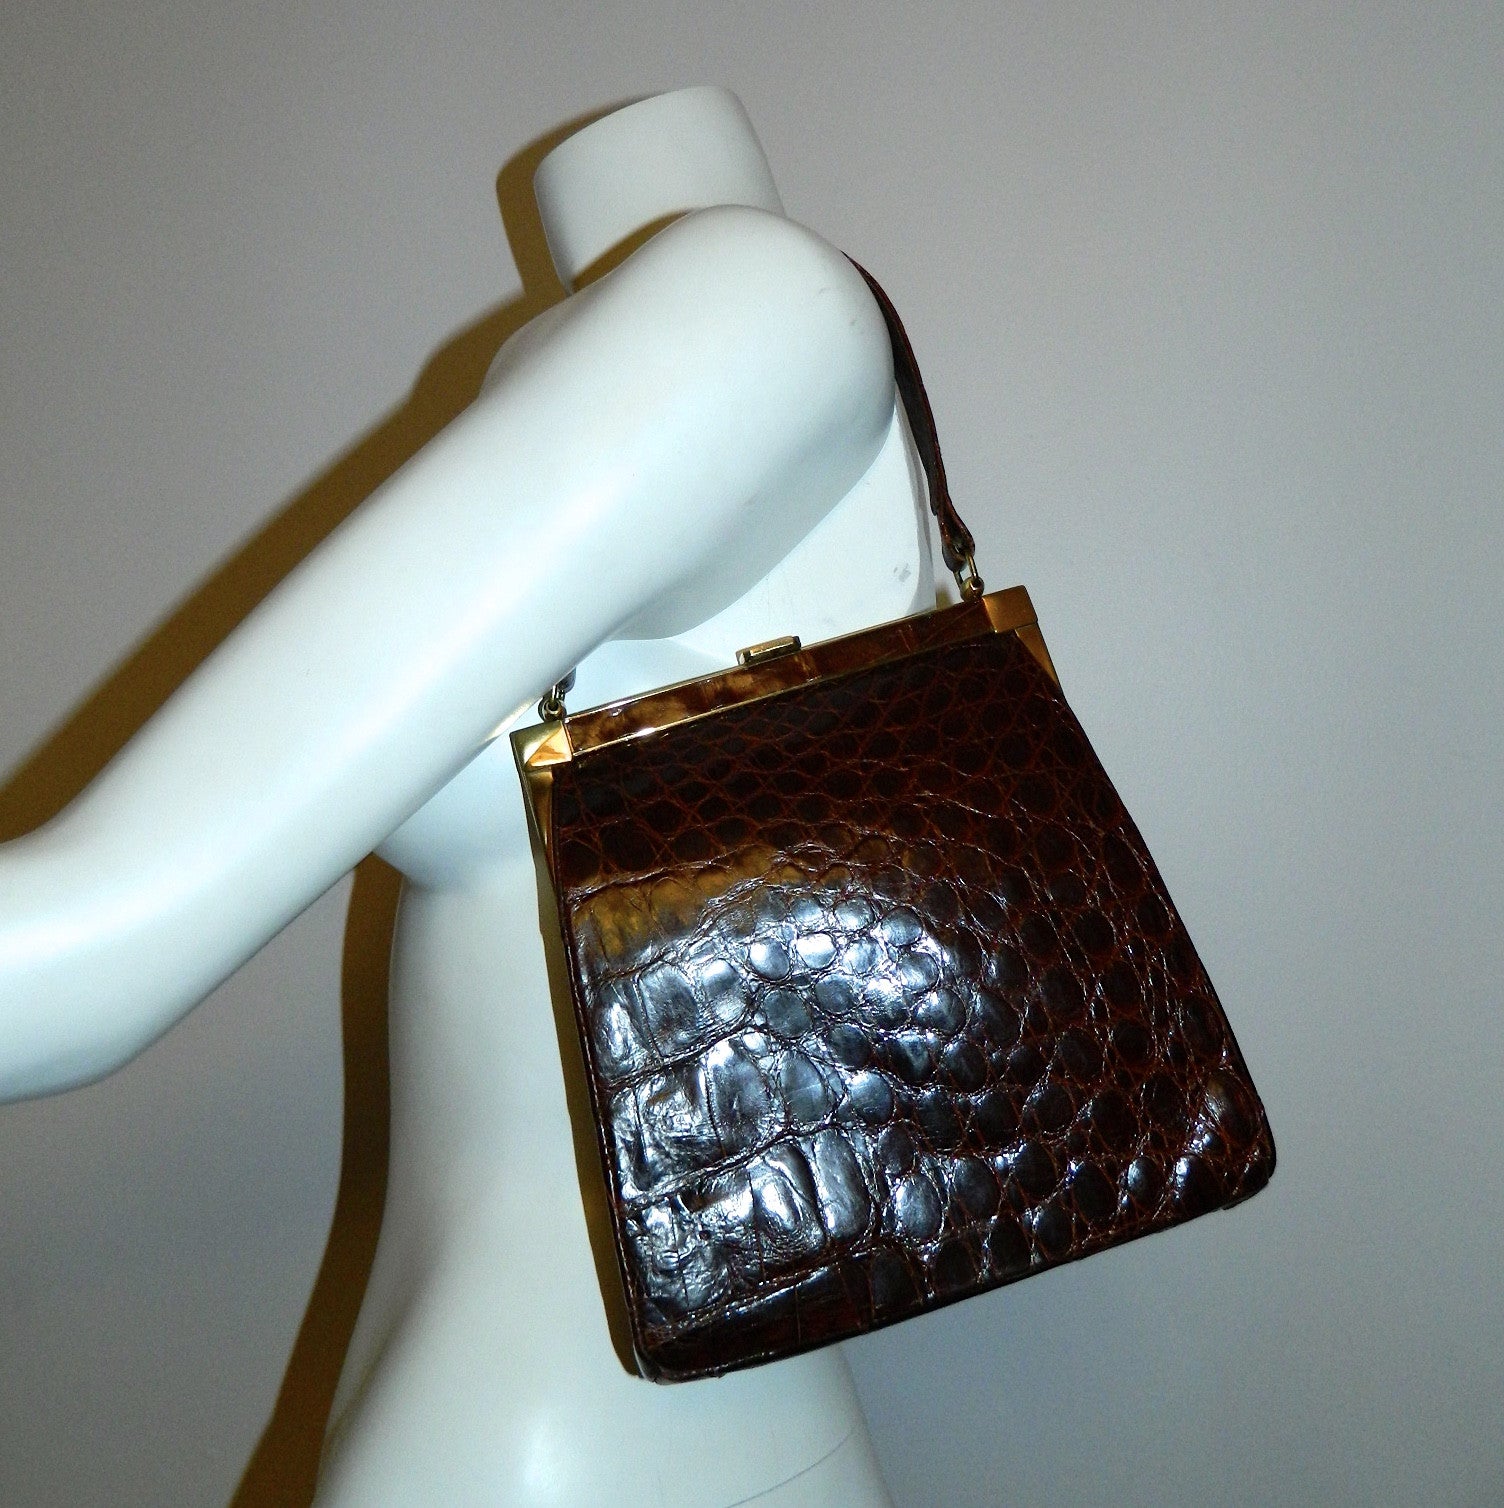 glossy brown crocodile handbag vintage 1940s Saks Fifth Avenue